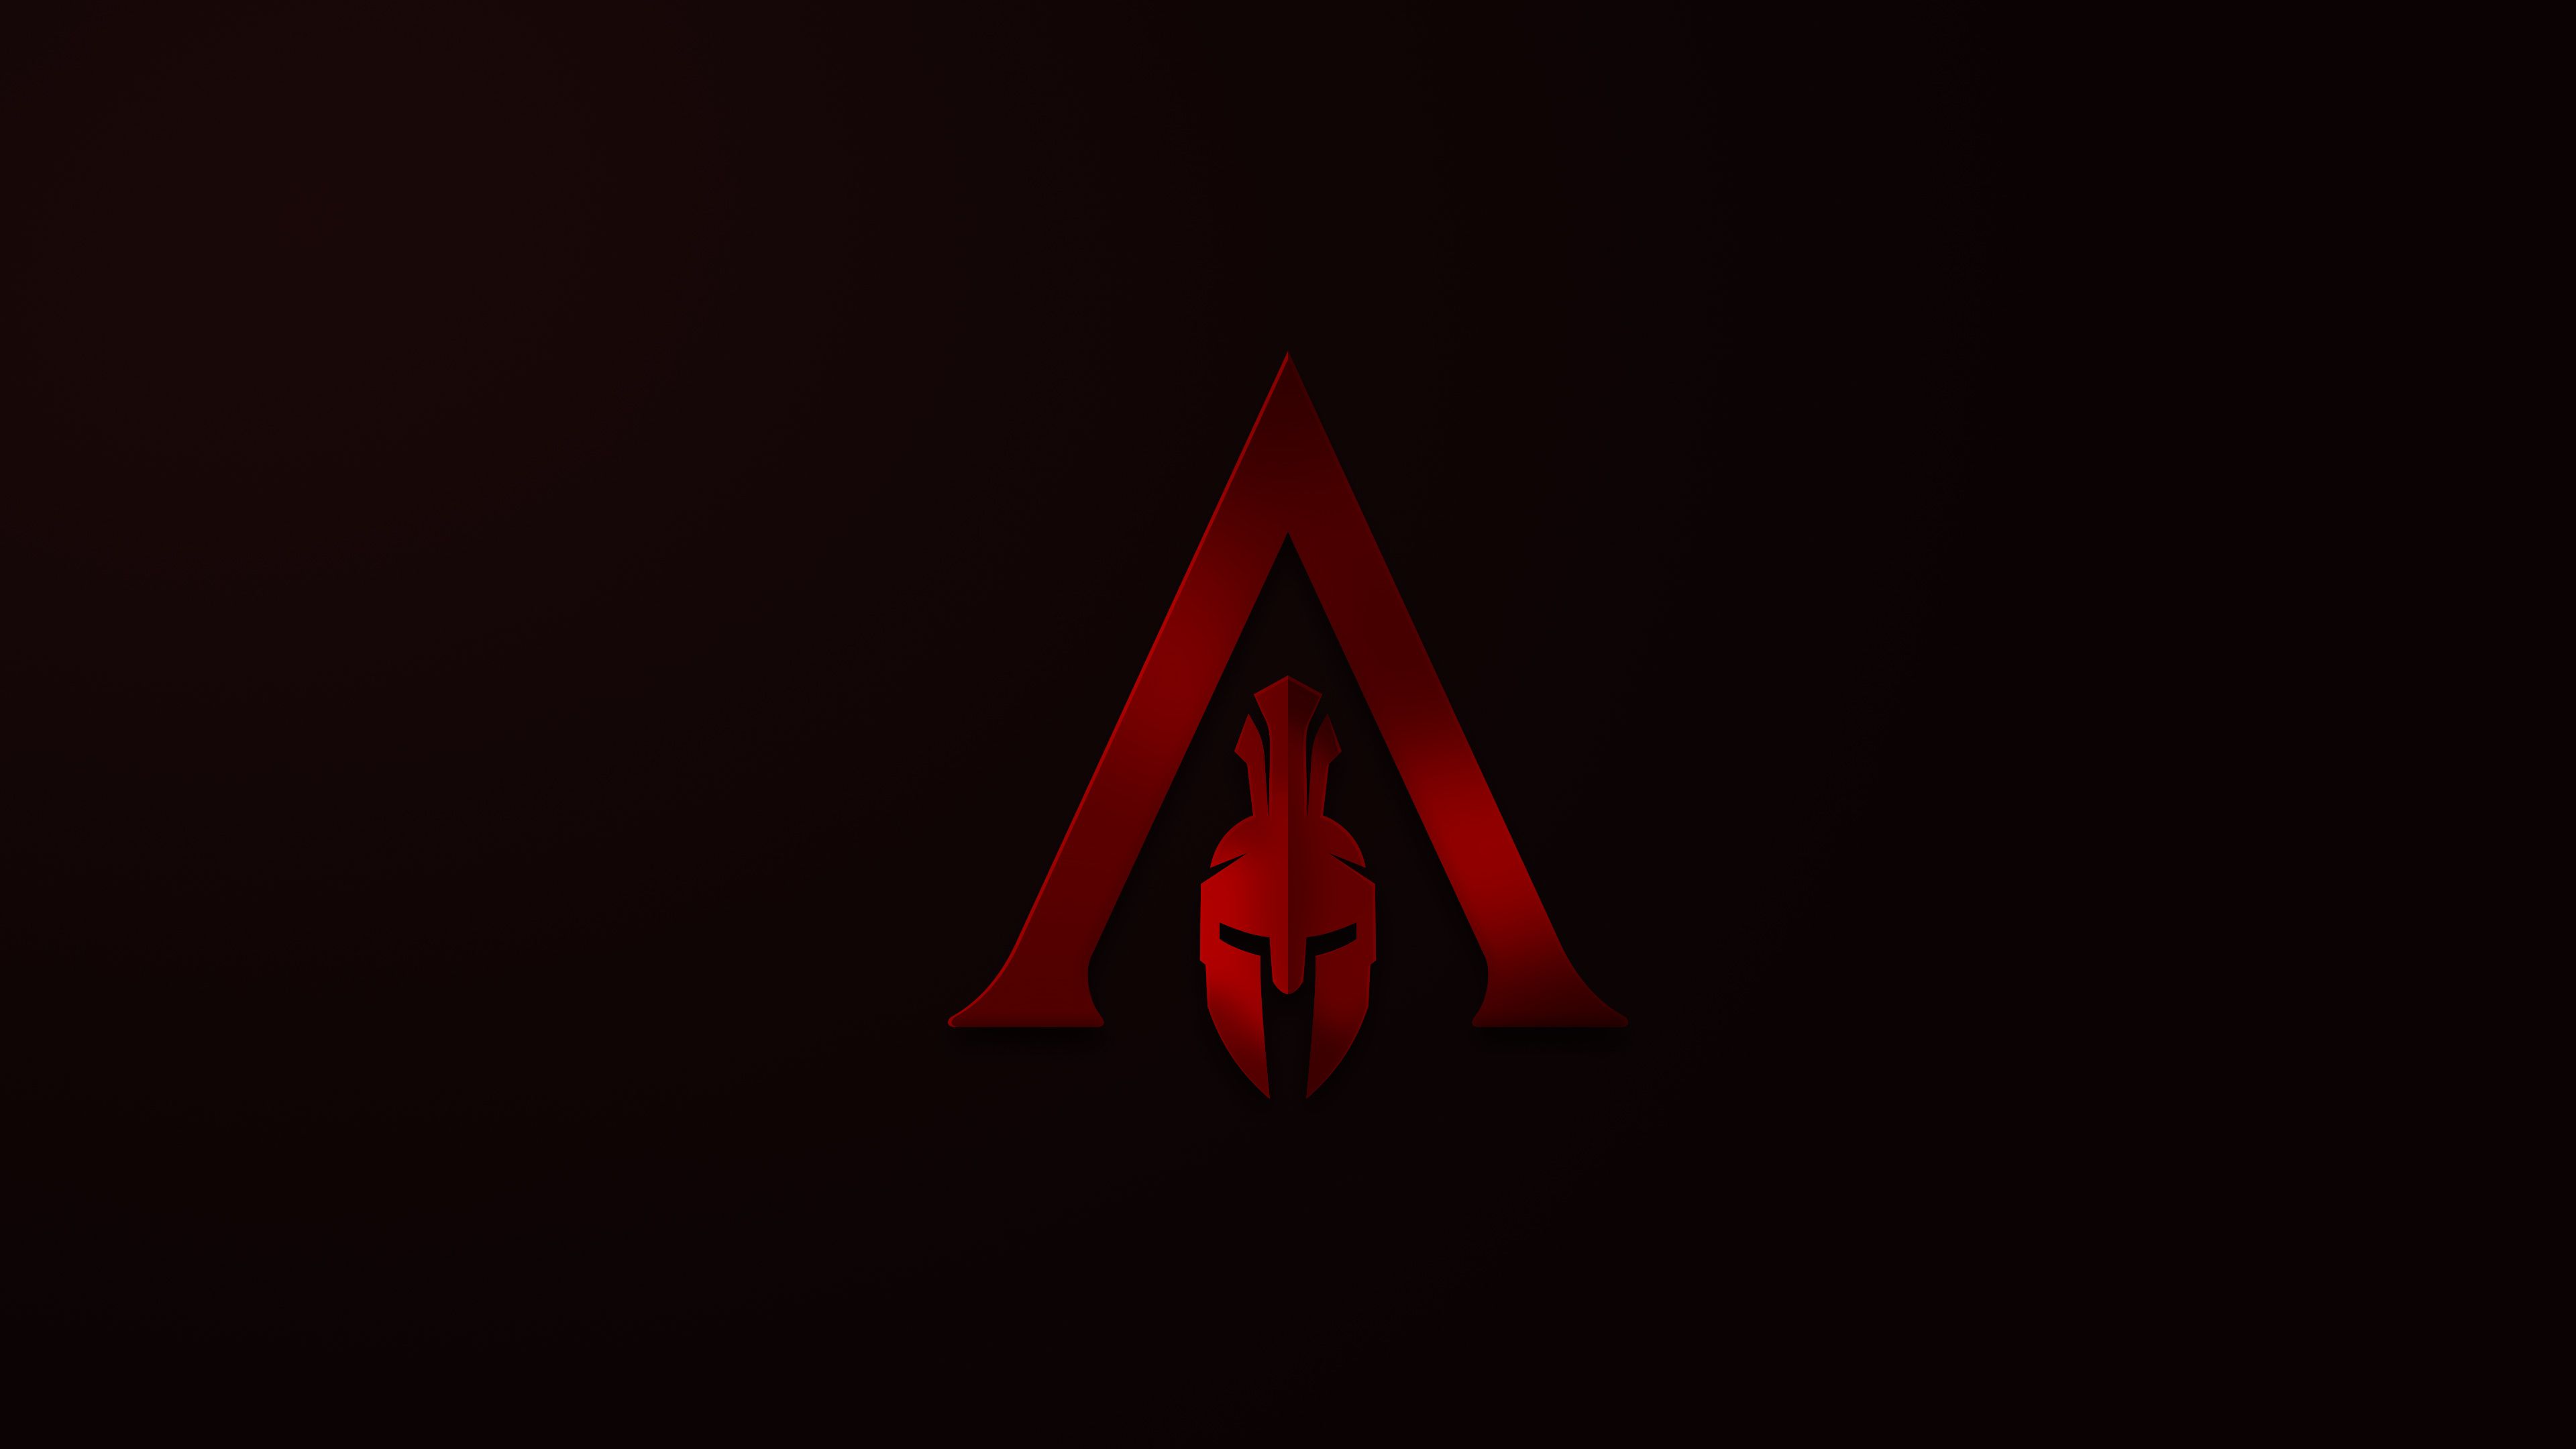 Wallpaper 4k Assassins Creed Odyssey Minimalism Logo 4k 2018 games